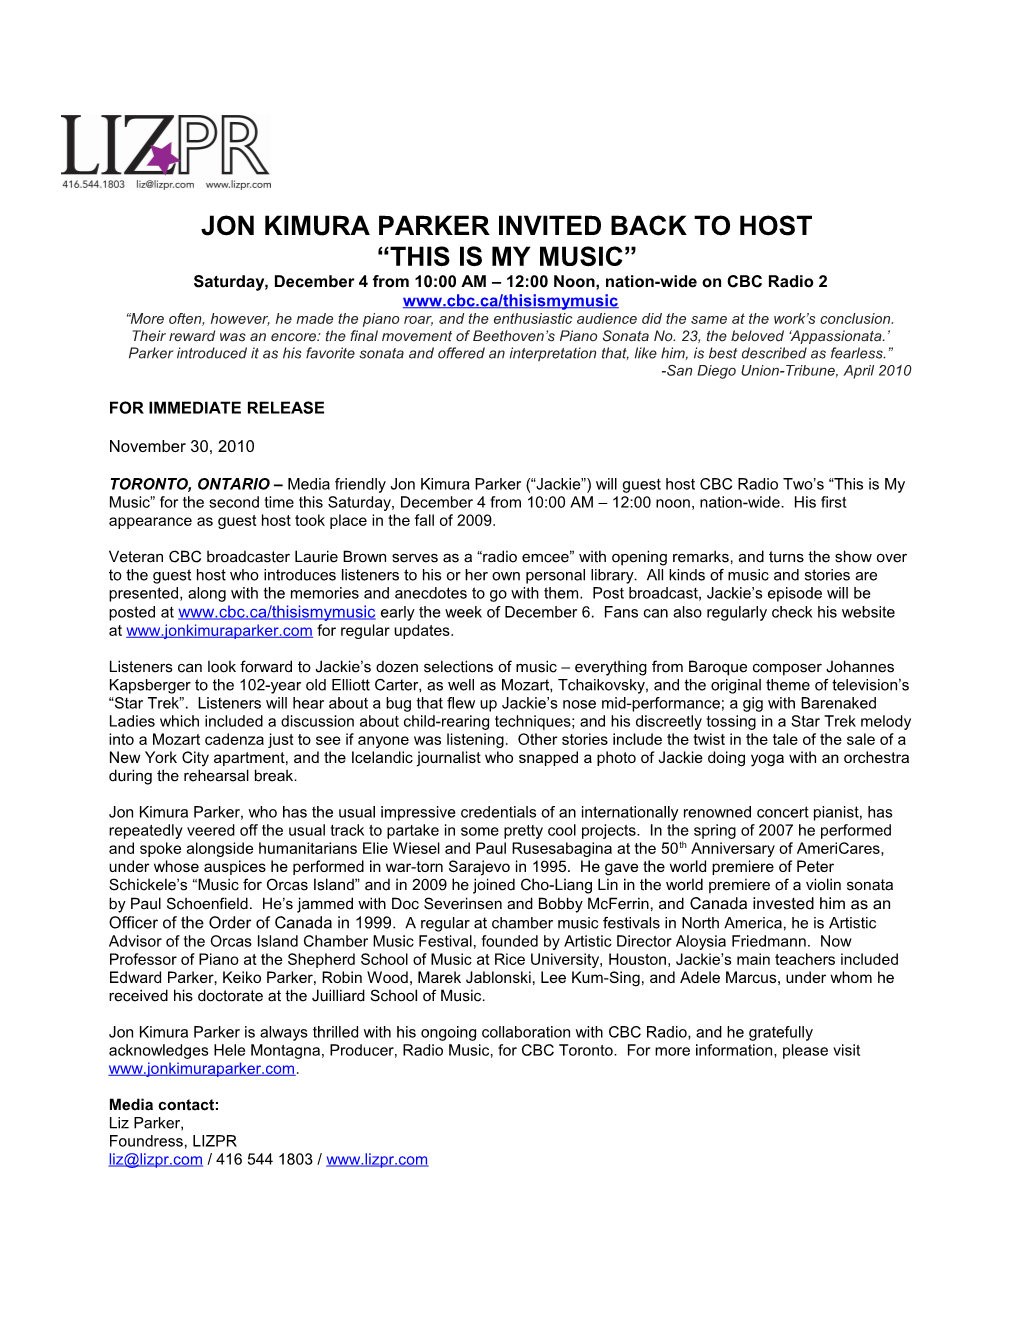 Jon Kimura Parker Invited Back to Host